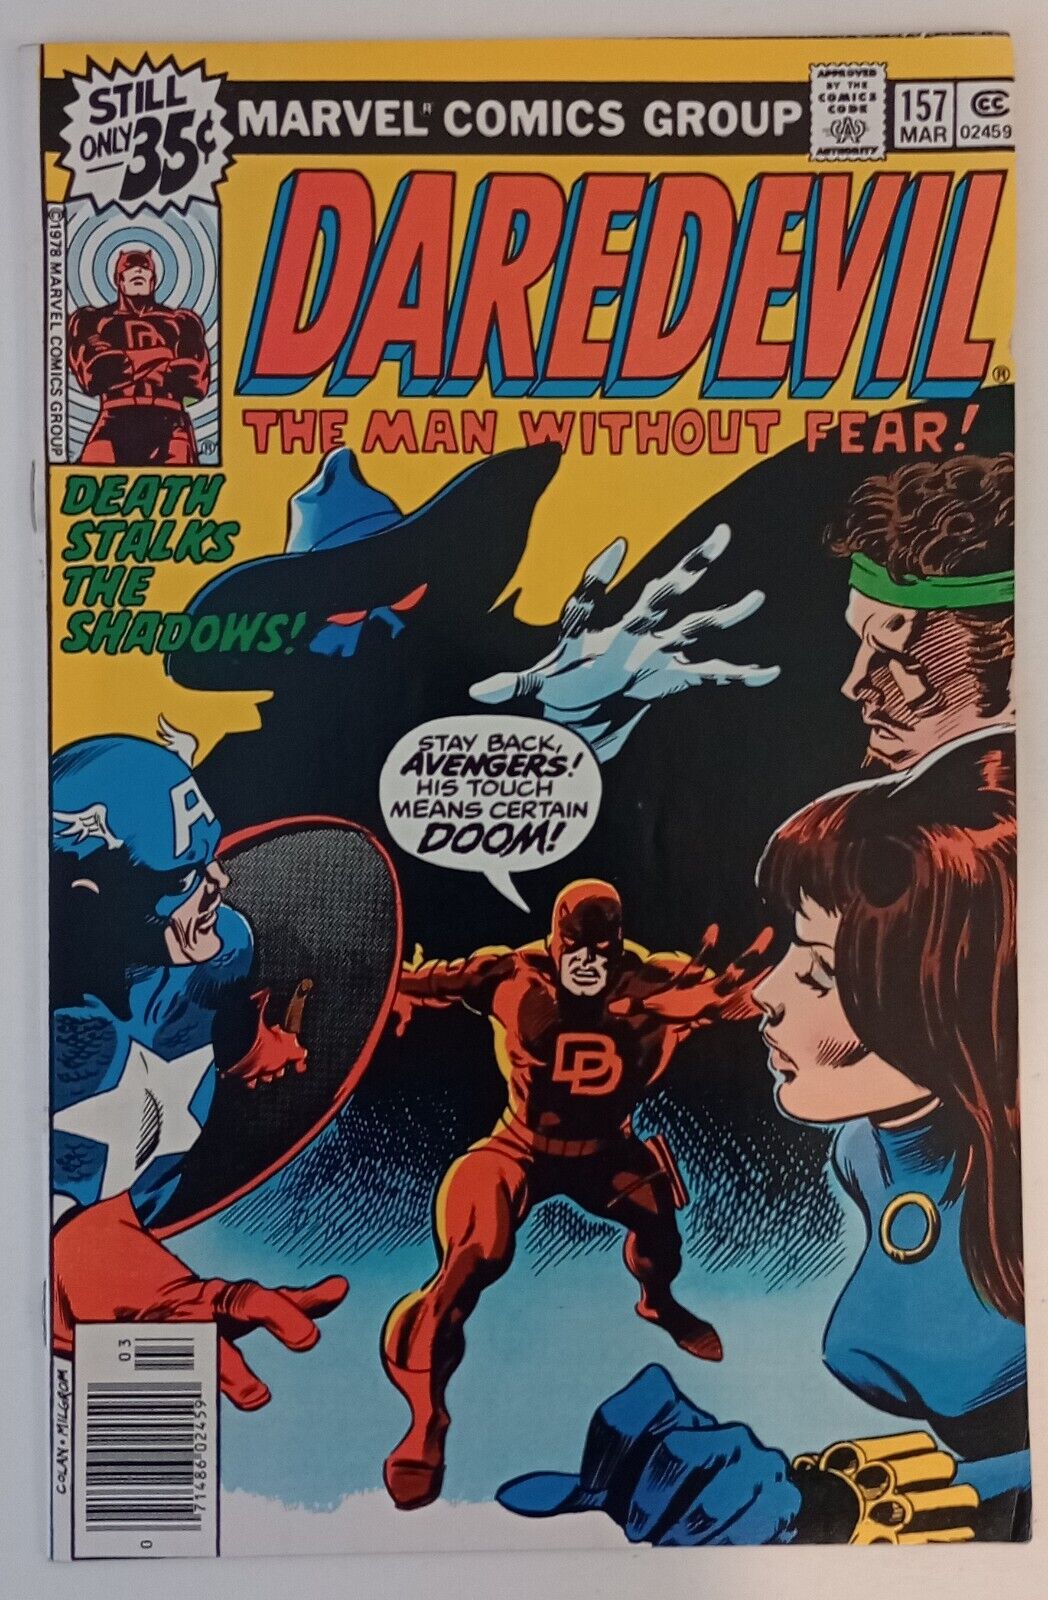  Daredevil #157 (Death Stalk\'s The Shadows/Death Stalker) 1978